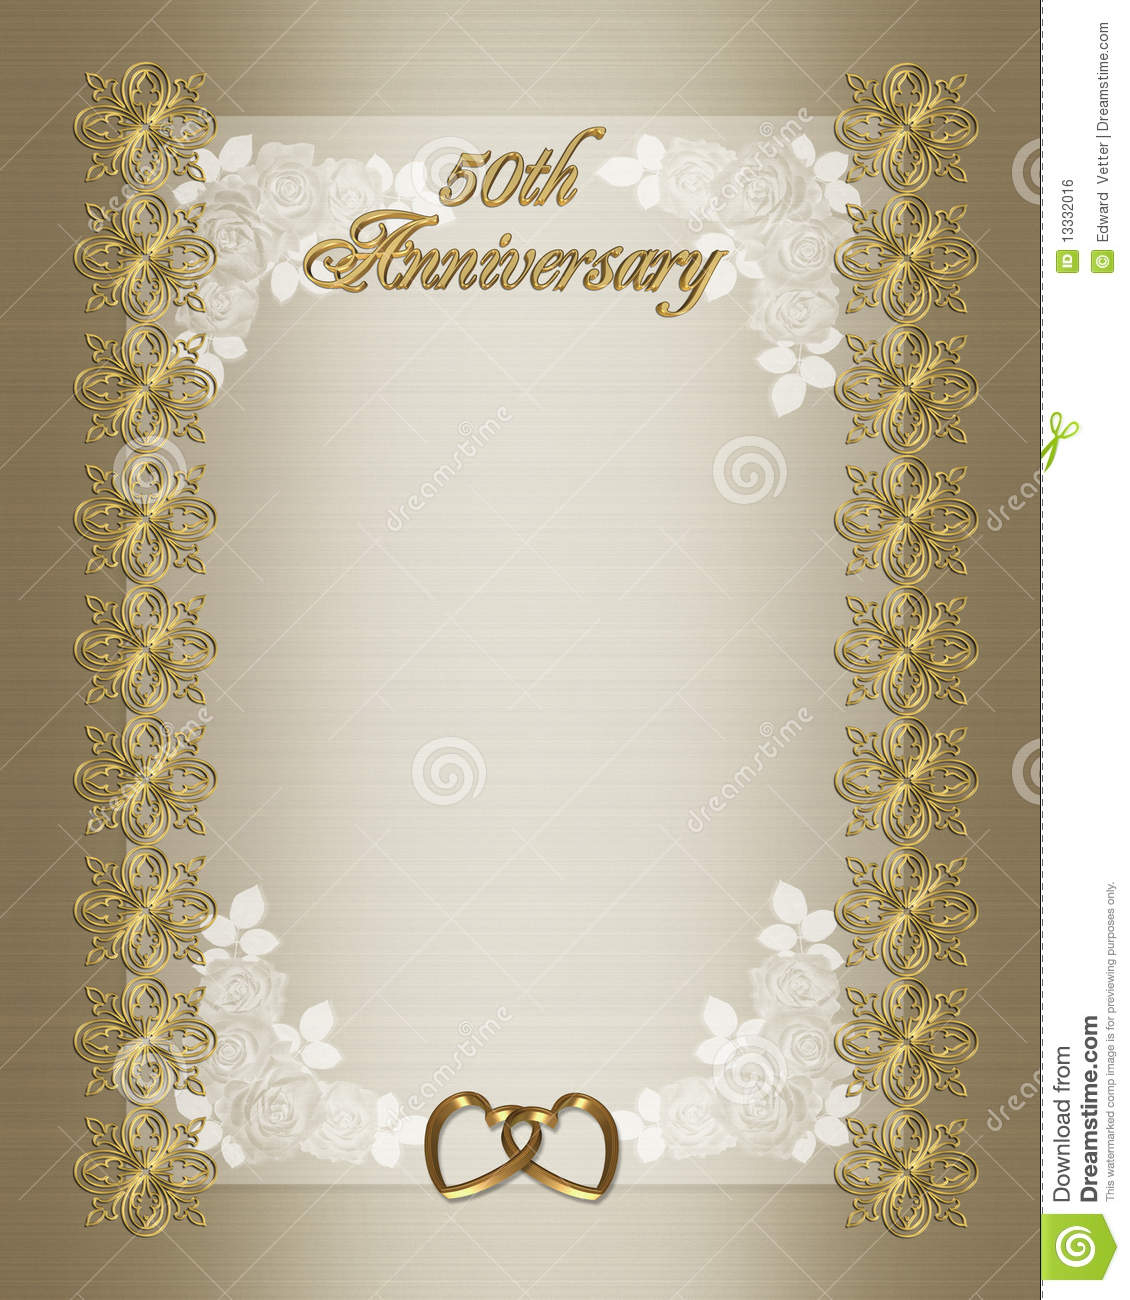 50th Wedding Anniversary Invitation Template Stock Illustration pertaining to measurements 1130 X 1300